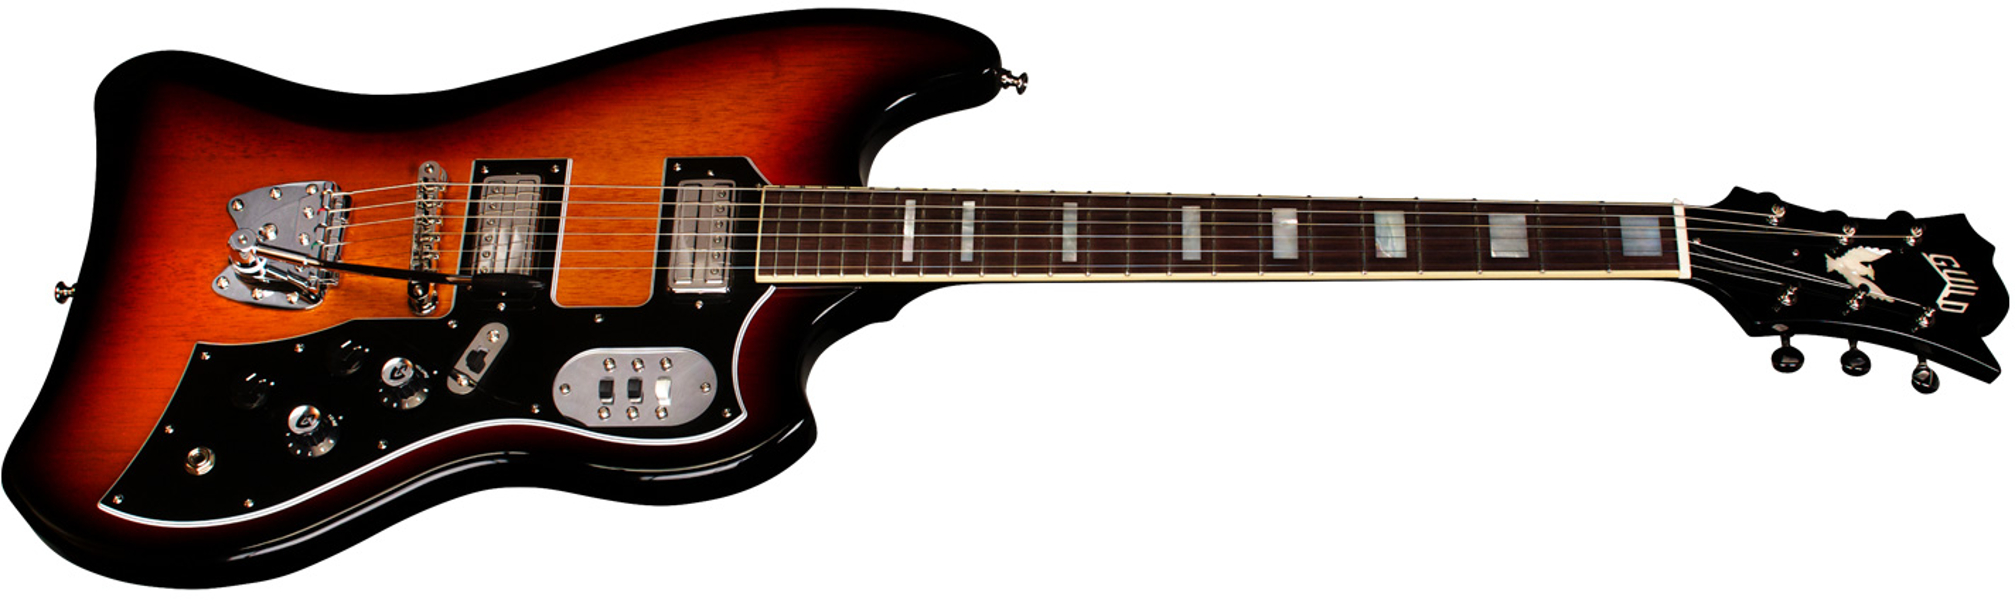 Guild S-200 T-bird - Antique Burst - Retro rock electric guitar - Variation 1